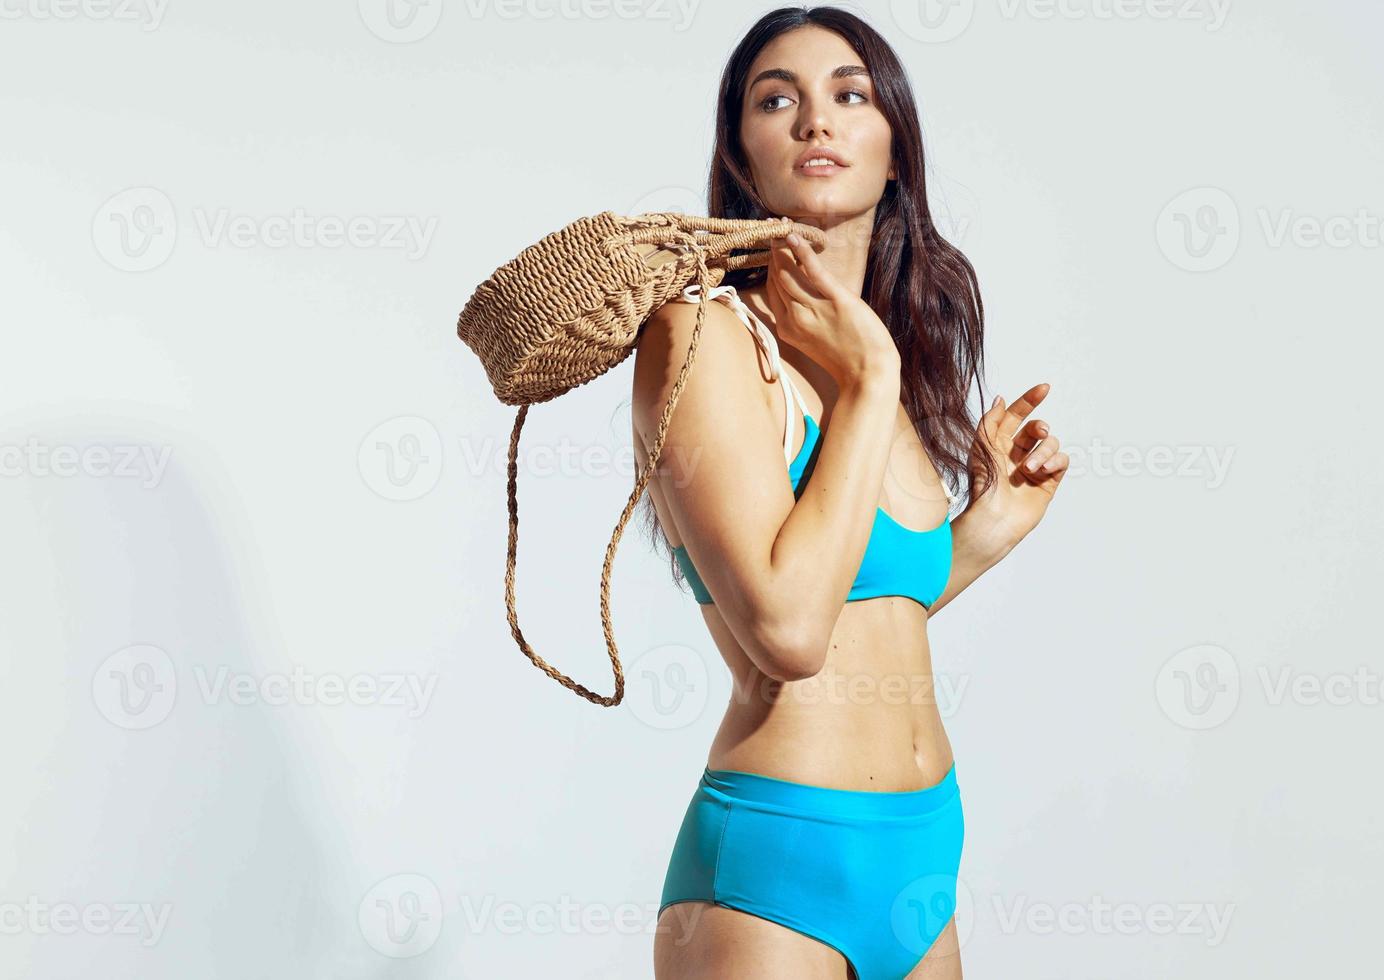 women in swimwear beach bag bikini posing glamor travel photo